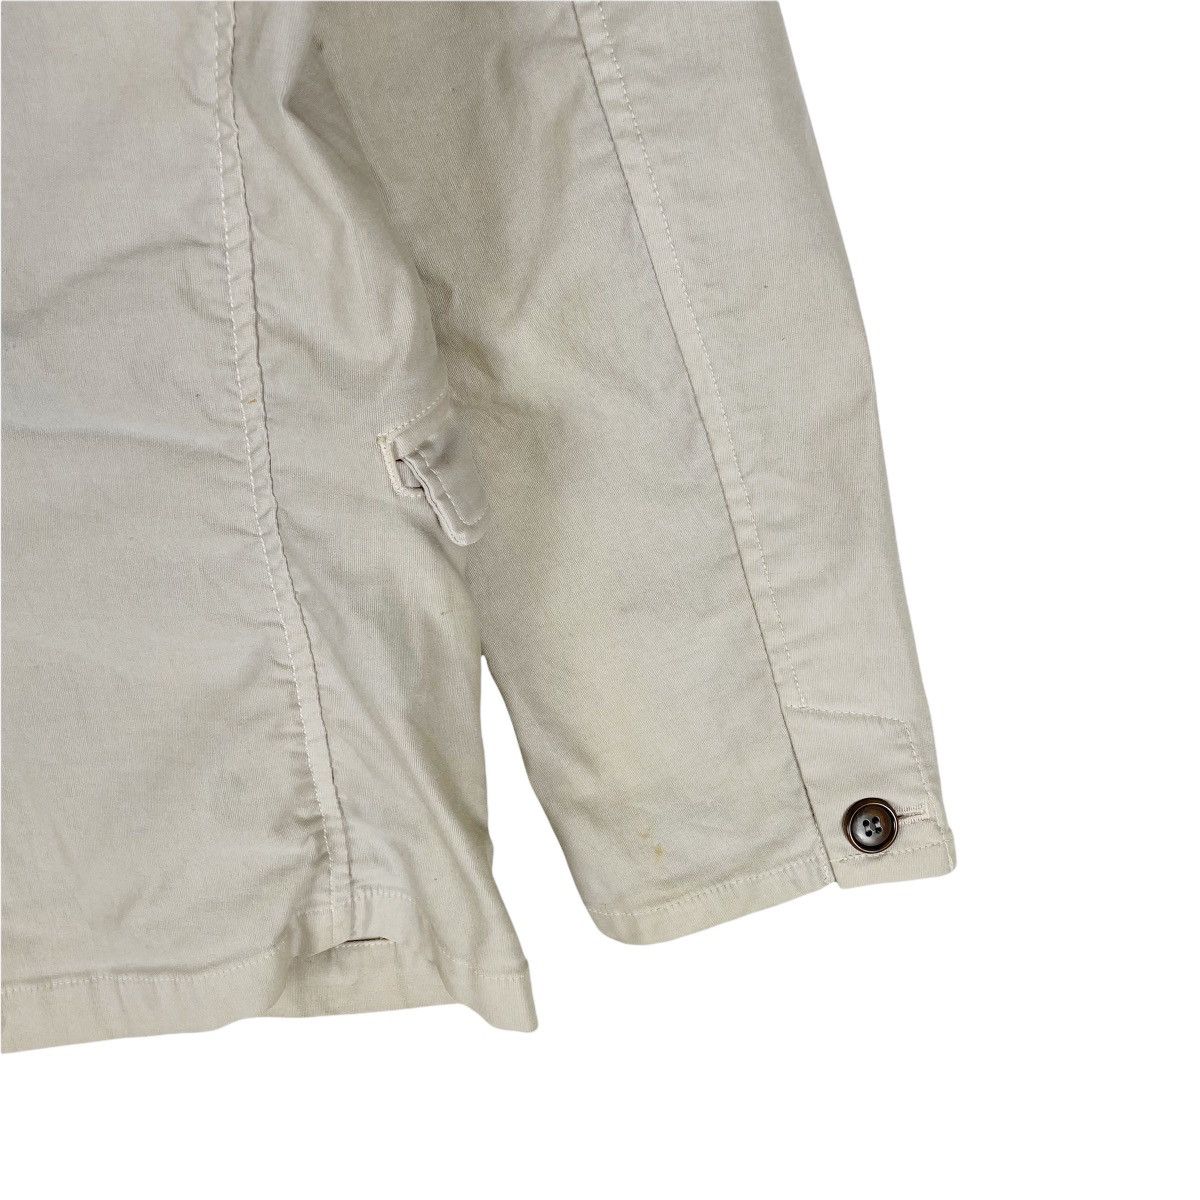 🔥HR Market Japan Workwear Jacket - 8